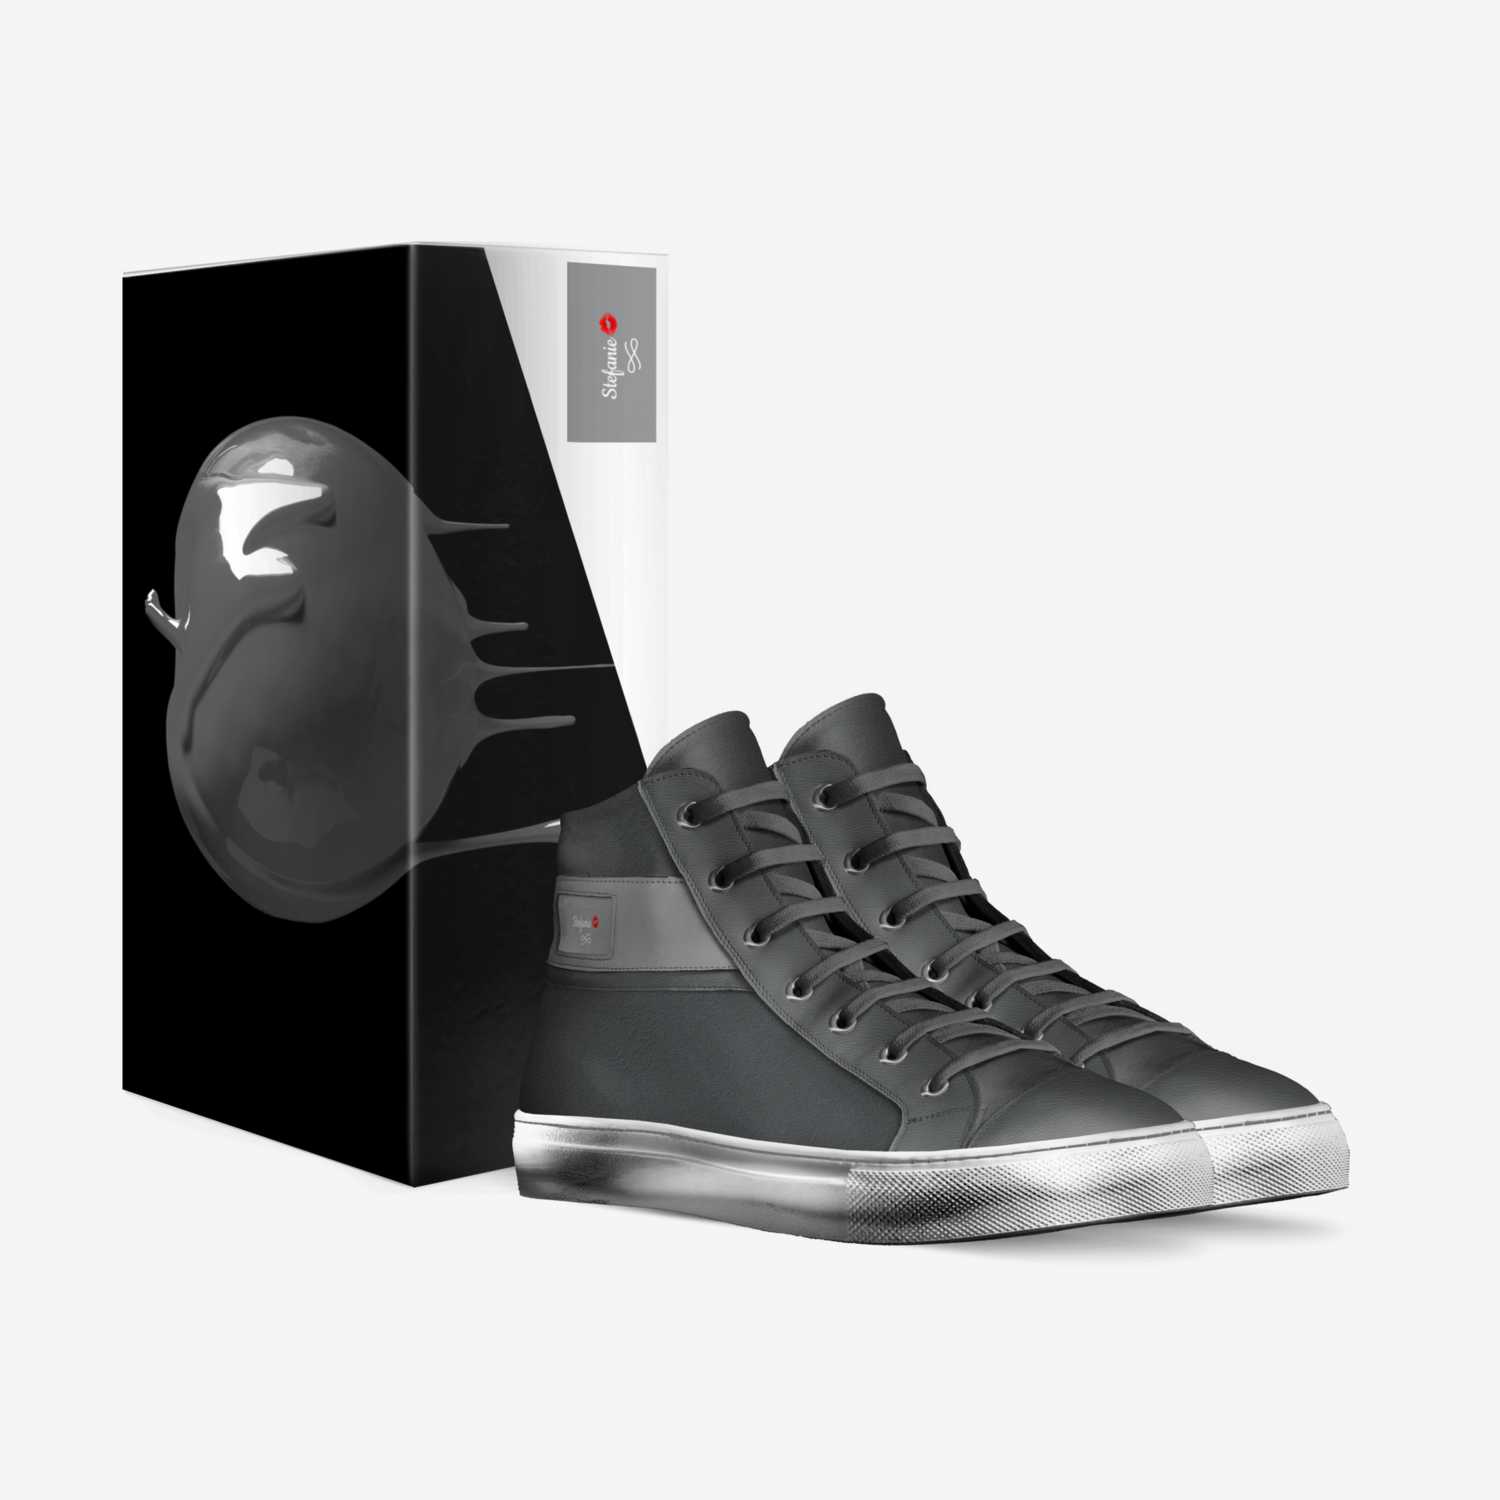 Stefanie💋 custom made in Italy shoes by Stefanie Black | Box view